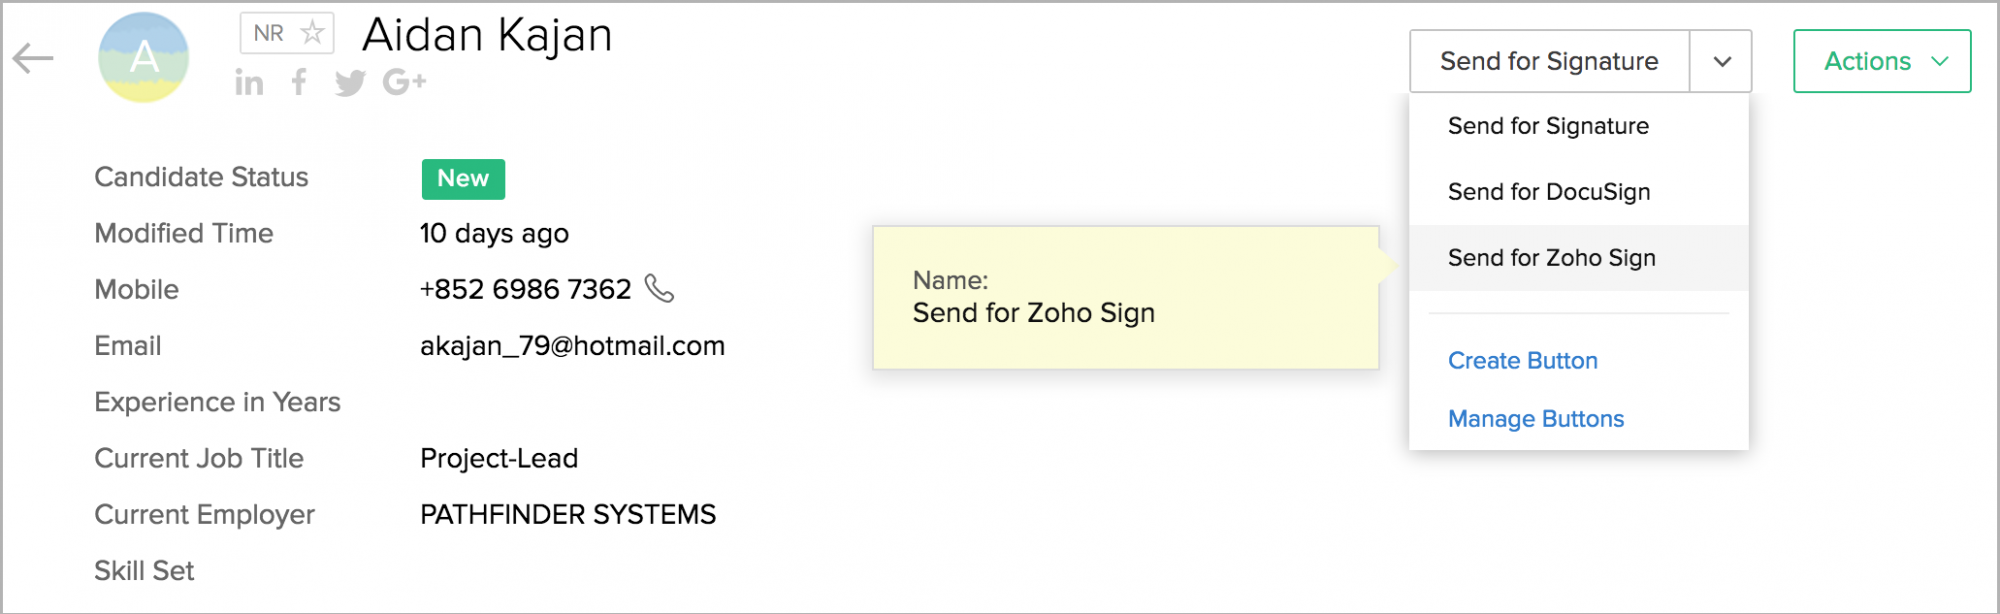 Send for Zoho Sign